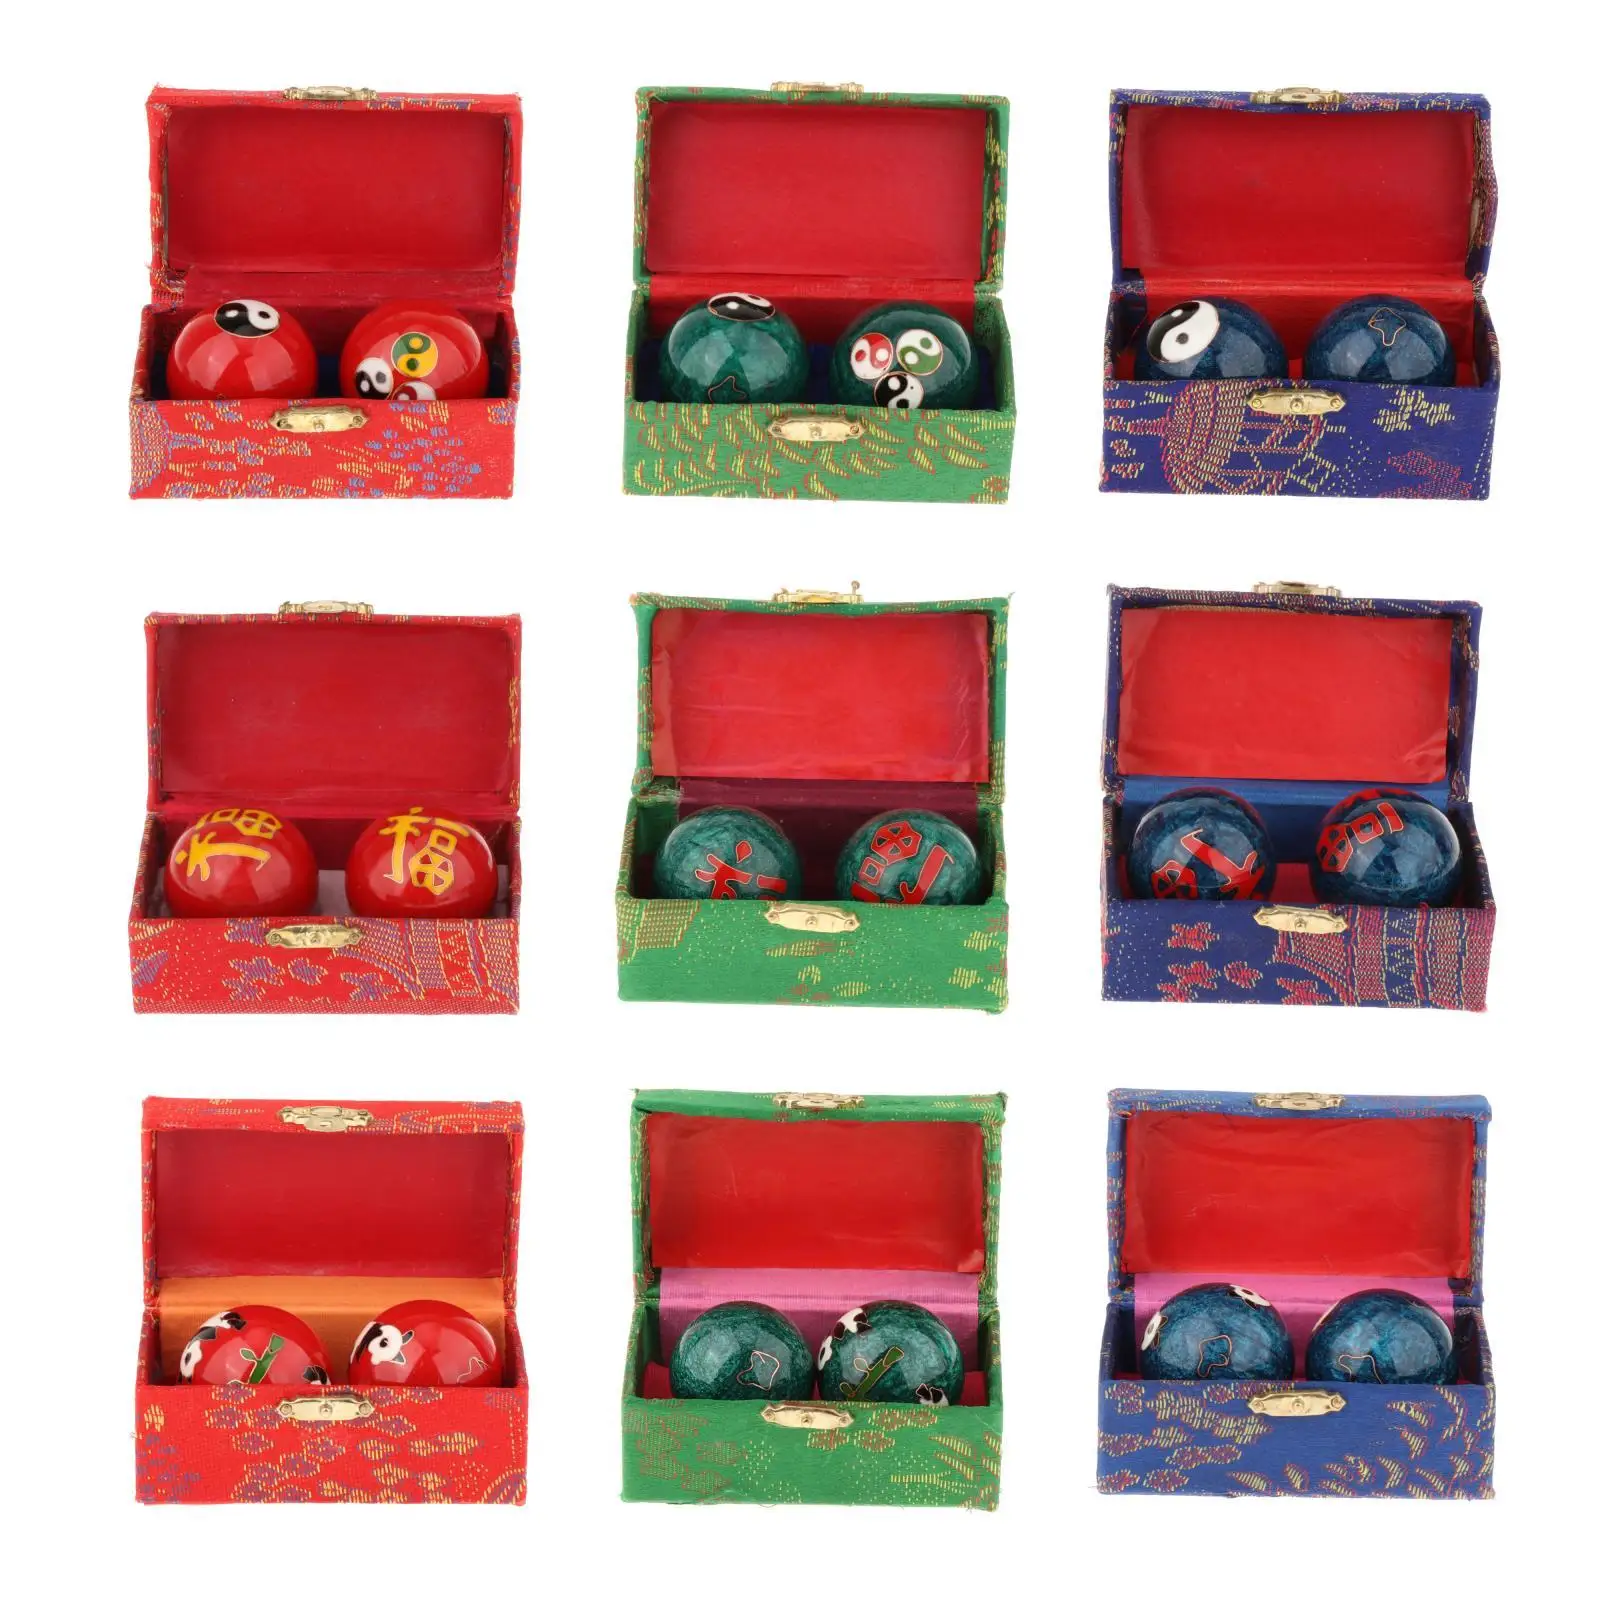 2x Hand Massage Balls with Storage Box Reusable Gift Chinese Baoding Balls Chinese Health Balls for Seniors Elderly Kids Parents